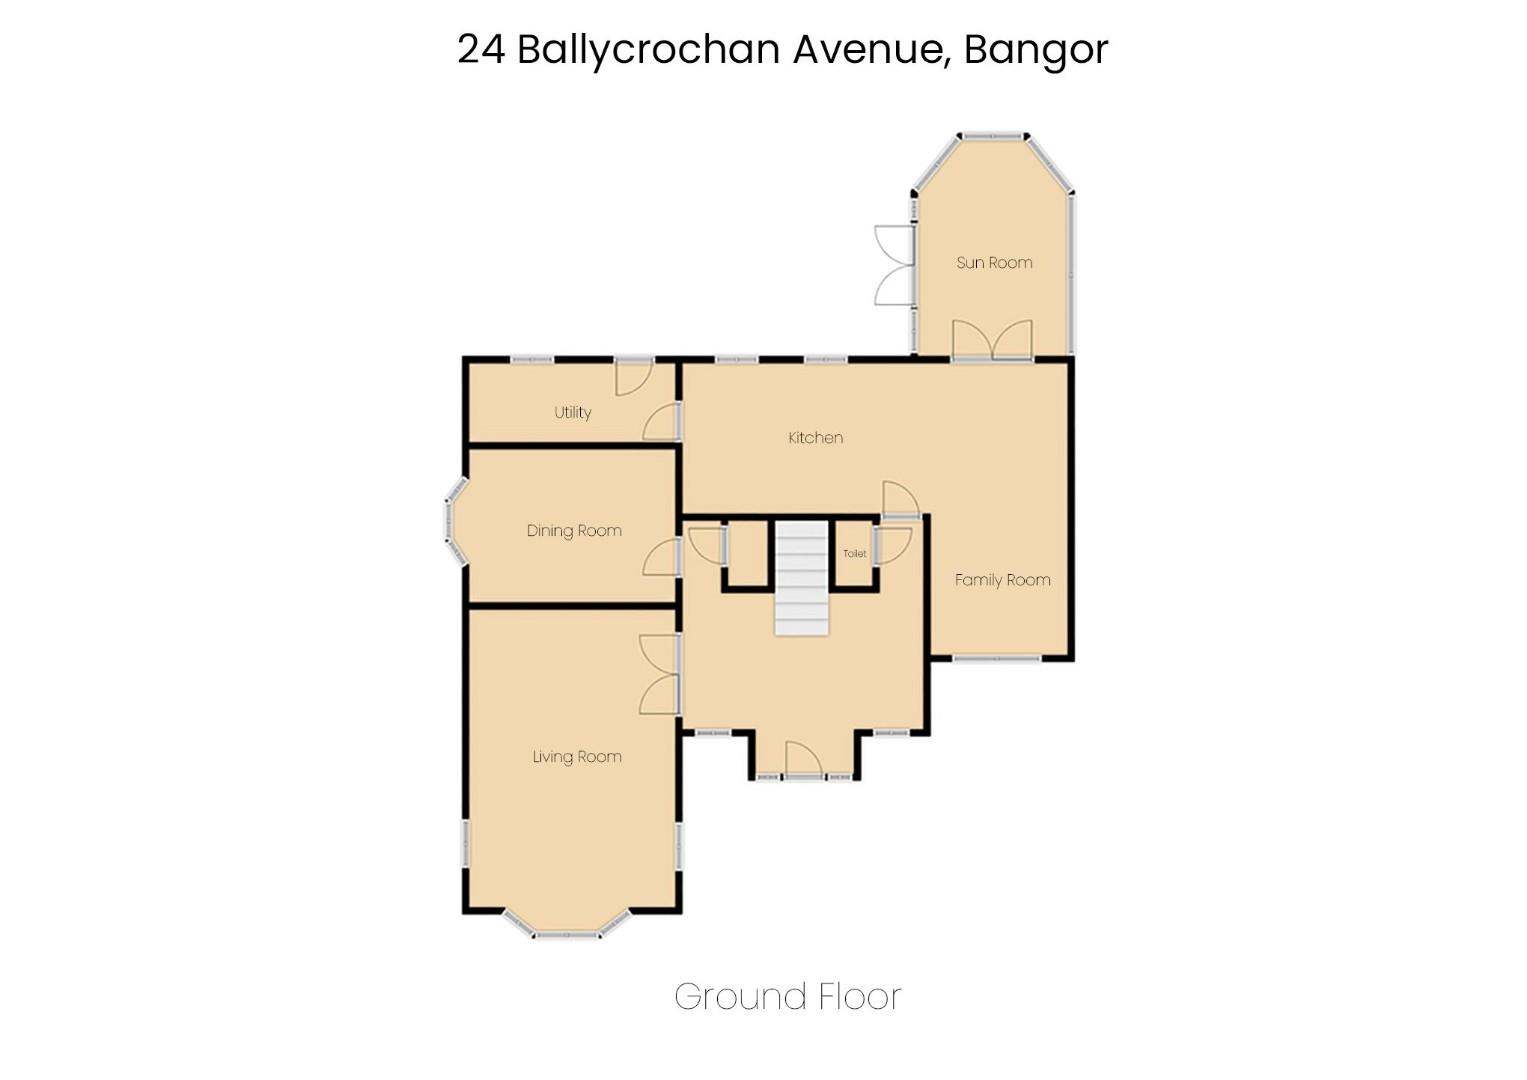 24 Ballycrochan Avenue